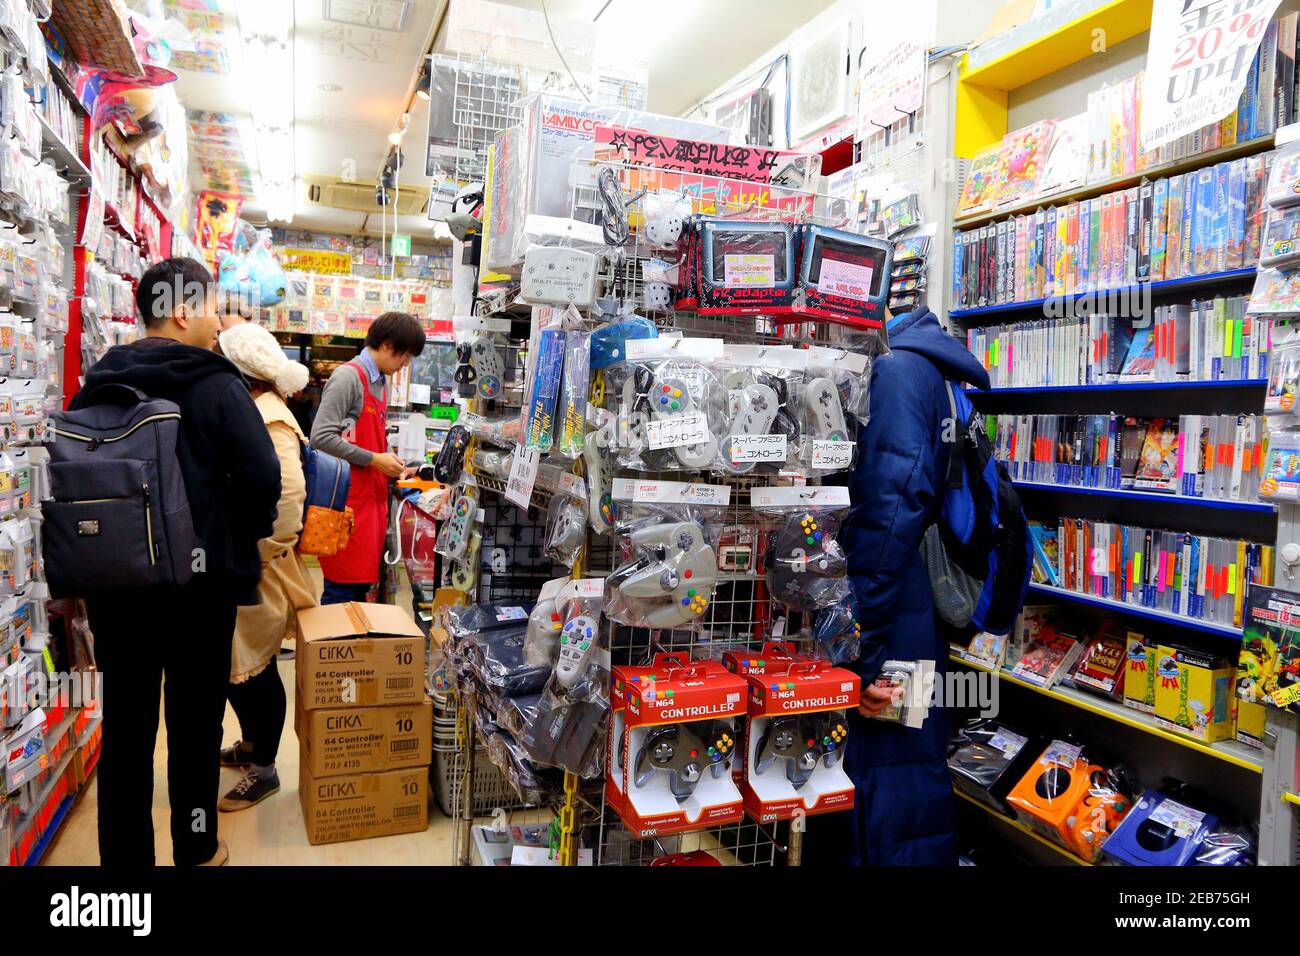 TOKYO, JAPAN - DECEMBER 4, 2016: People visit retro gaming collectible store in Akihabara district of Tokyo, Japan. Akihabara Electric District specia Stock Photo